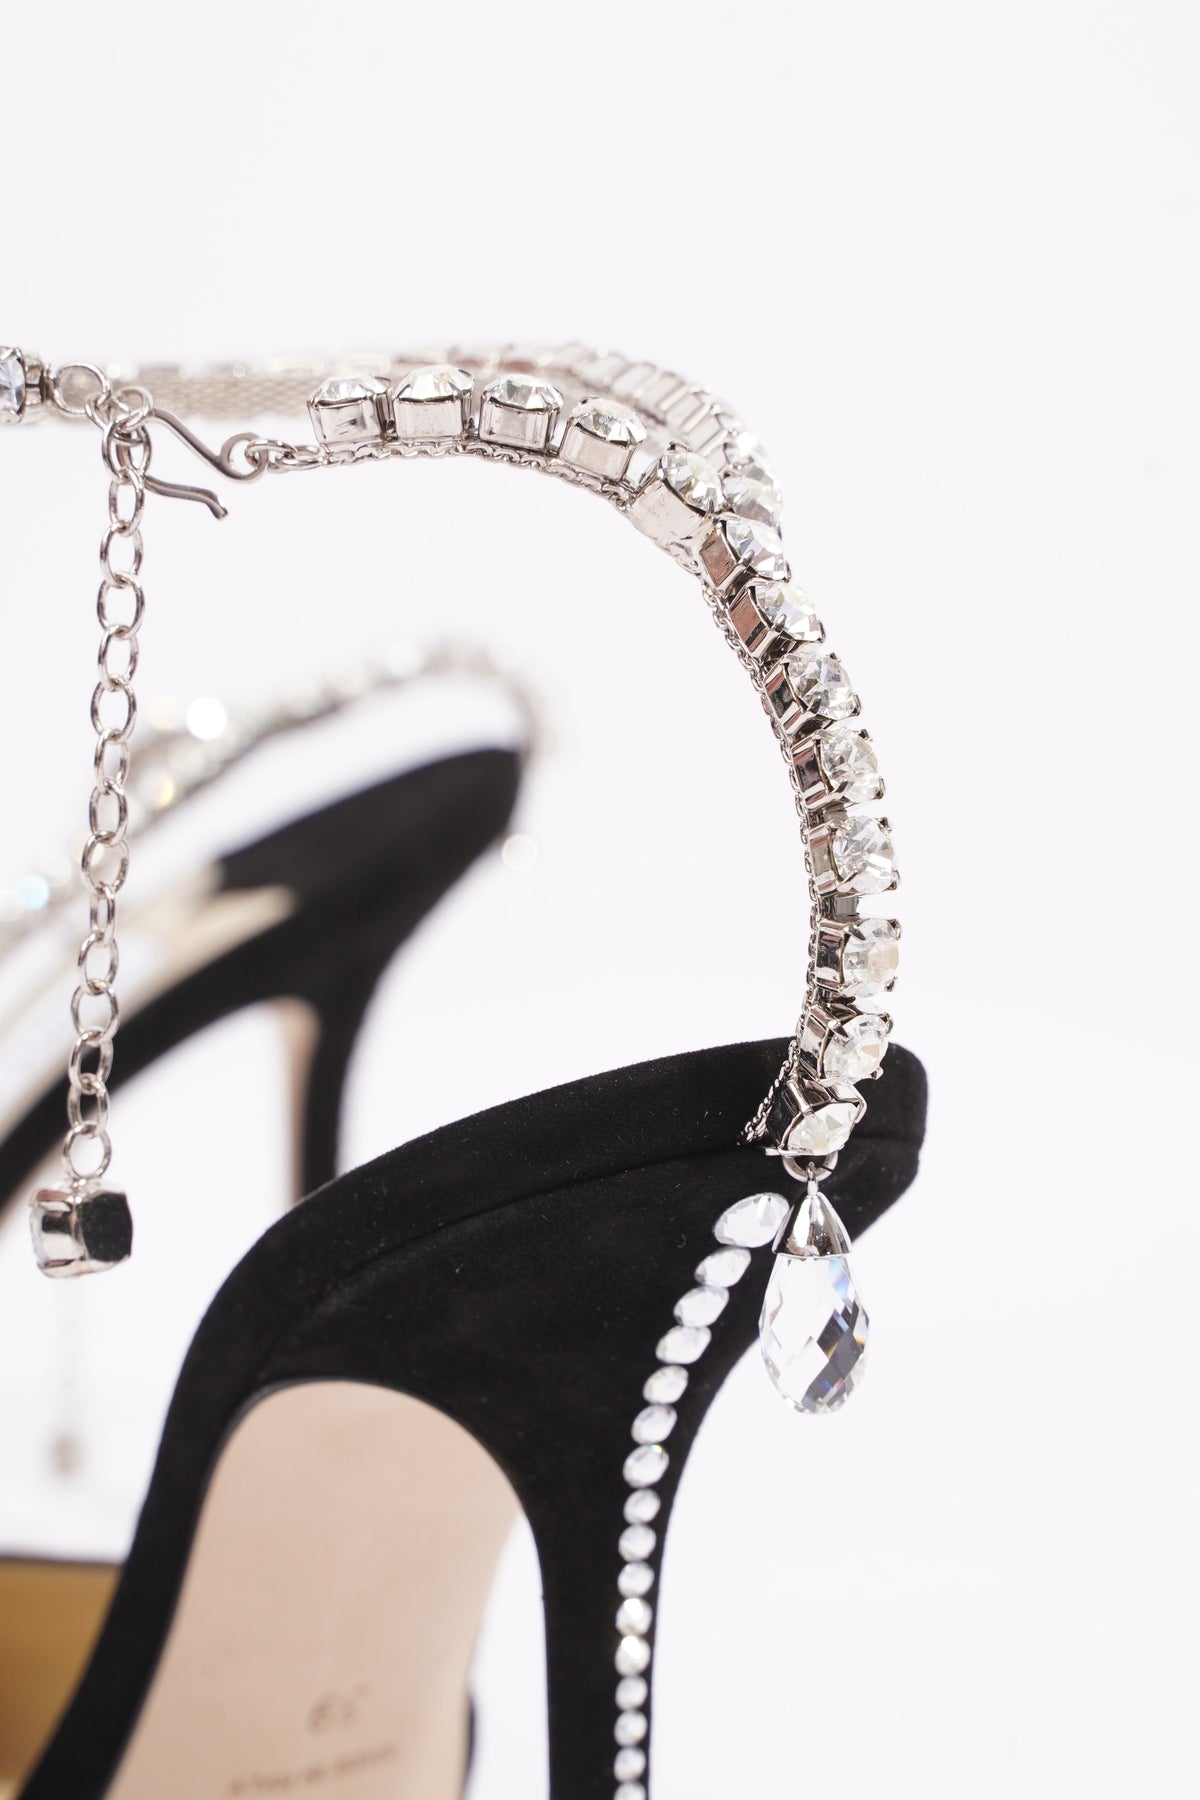 Jimmy Choo Alexa 60 Champagne Glitter Crystal Shoes Wedding Heels 36.5 New  $1495 | eBay